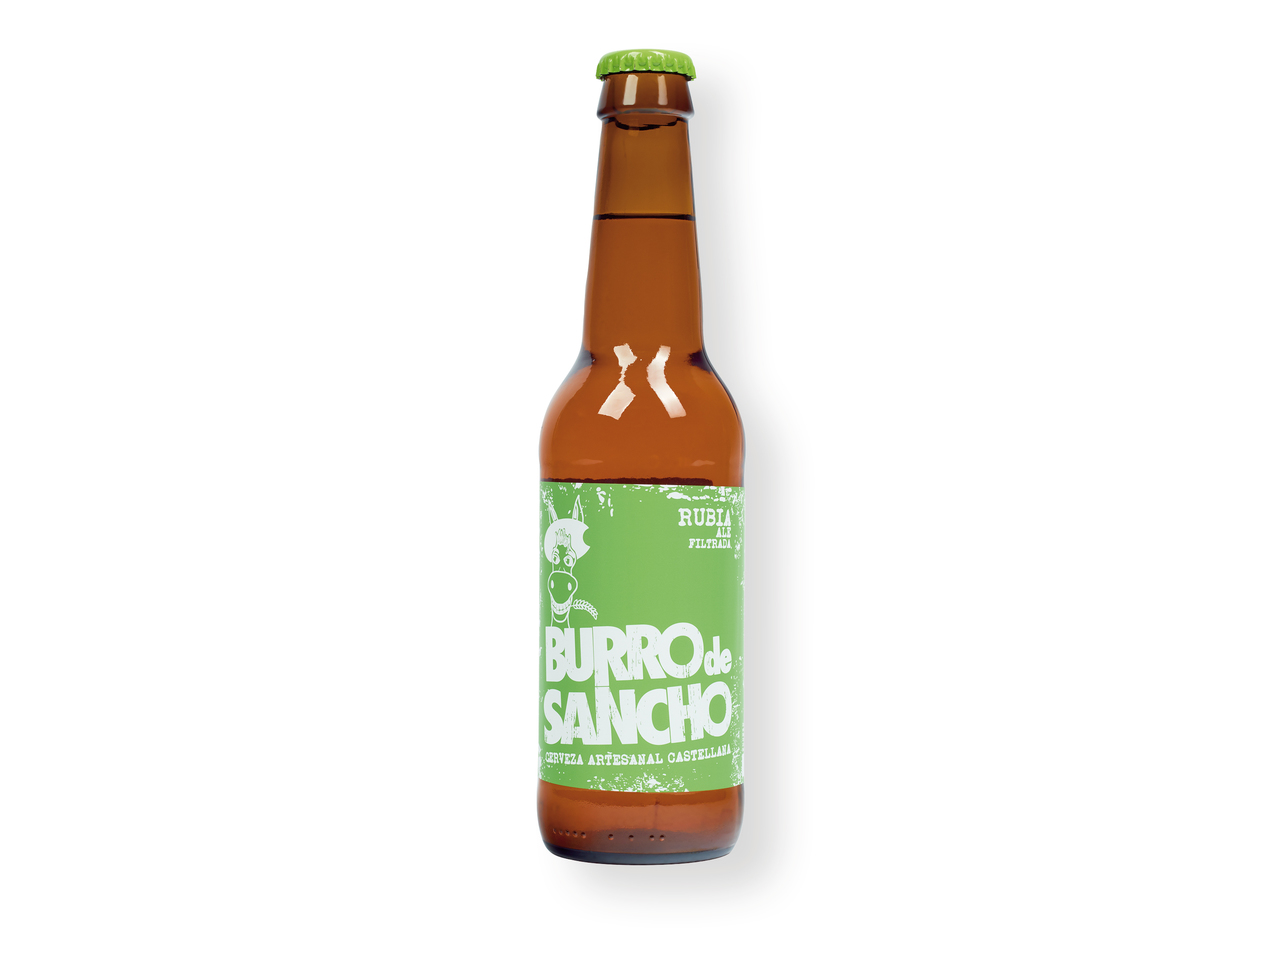 'Burro de Sancho(R)' Cerveza rubia artesana